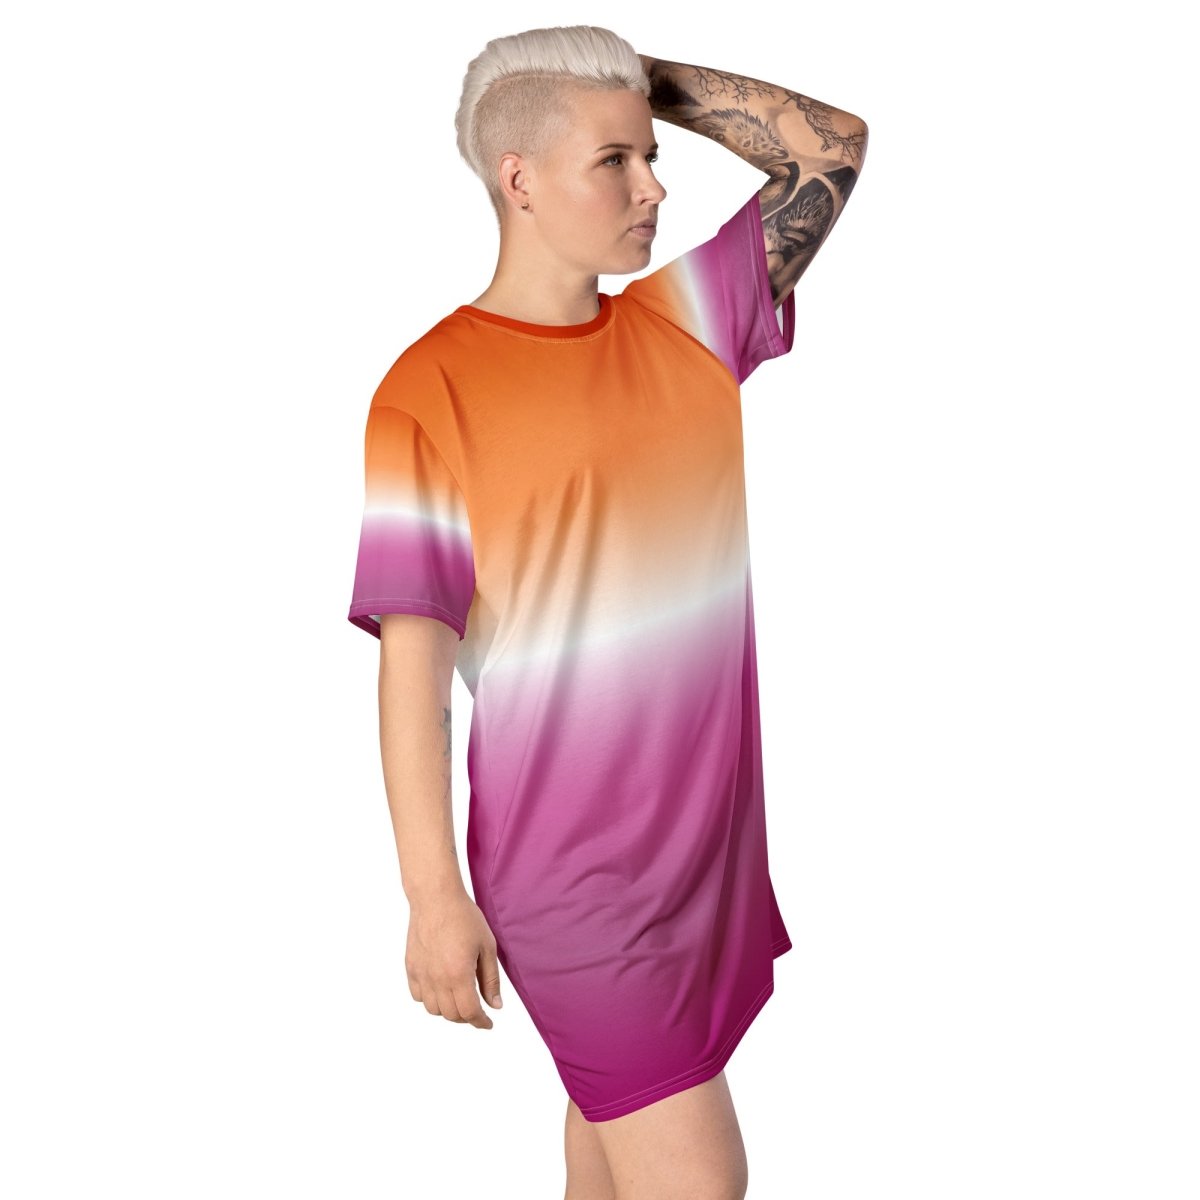 Ombré Lesbian Flag Dress - On Trend Shirts